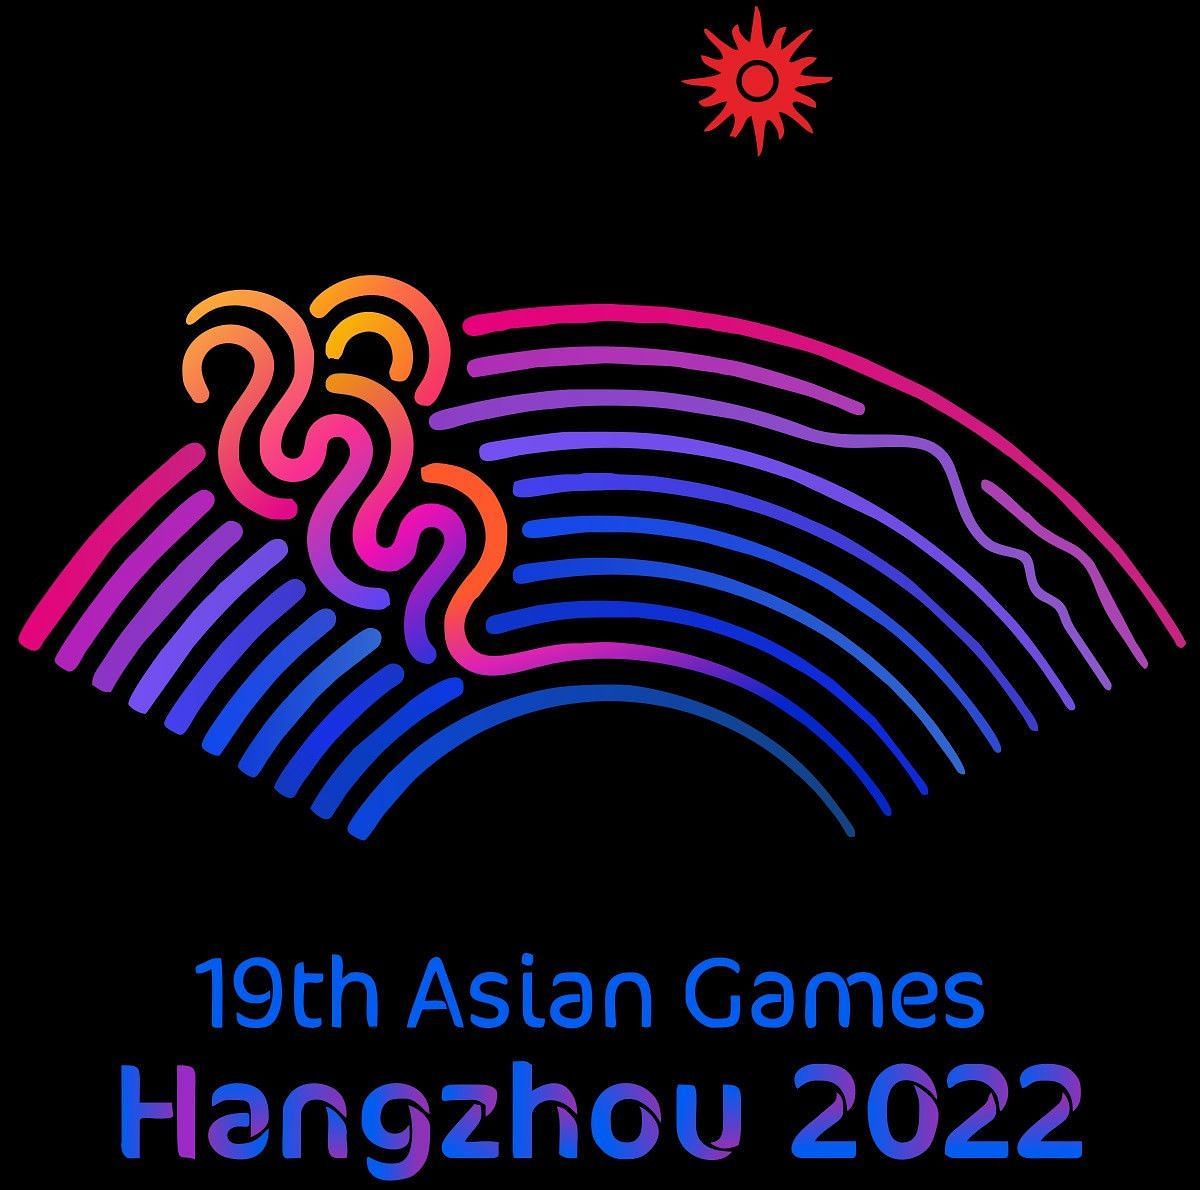 Representative image: The Asian Games logo.